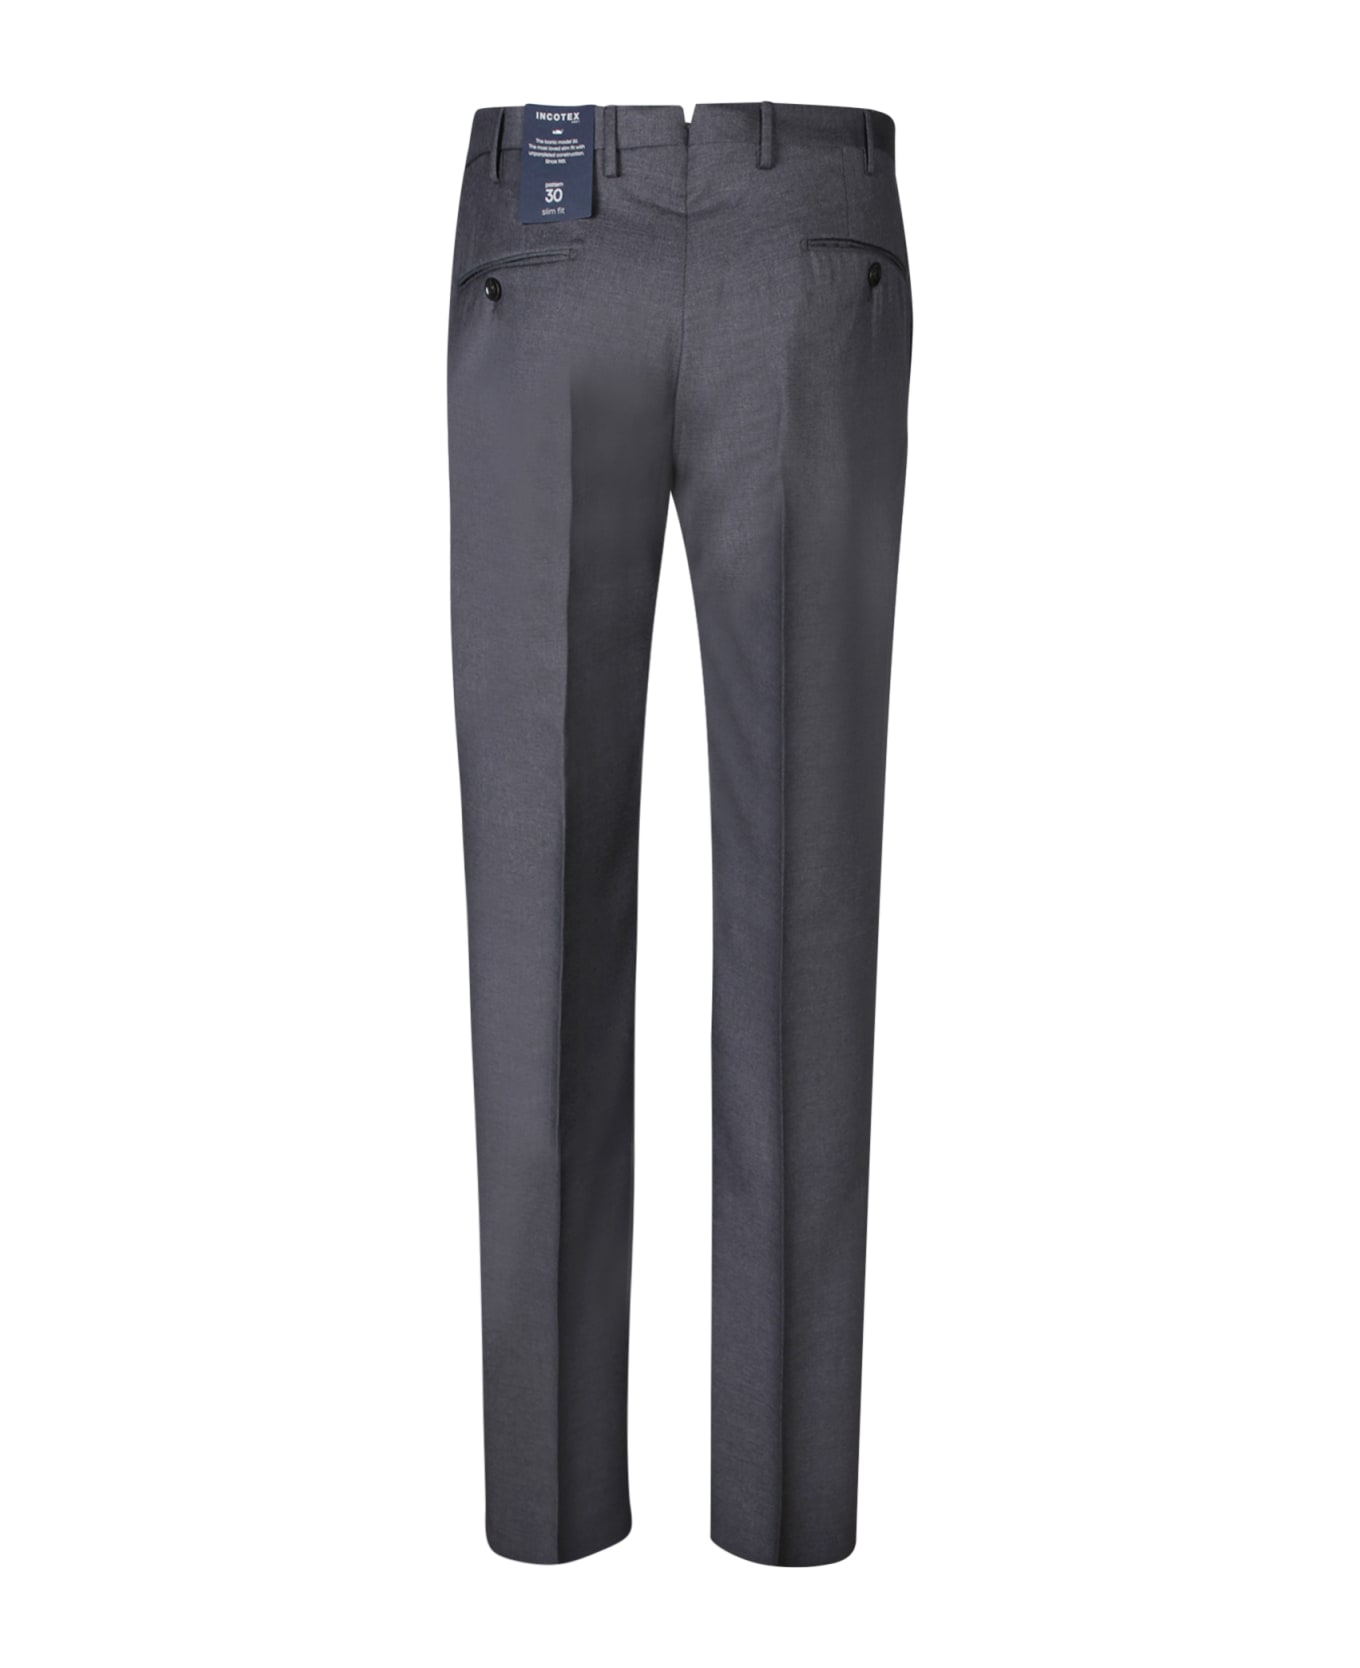 Incotex Slim Fit Gray Trousers - Grey